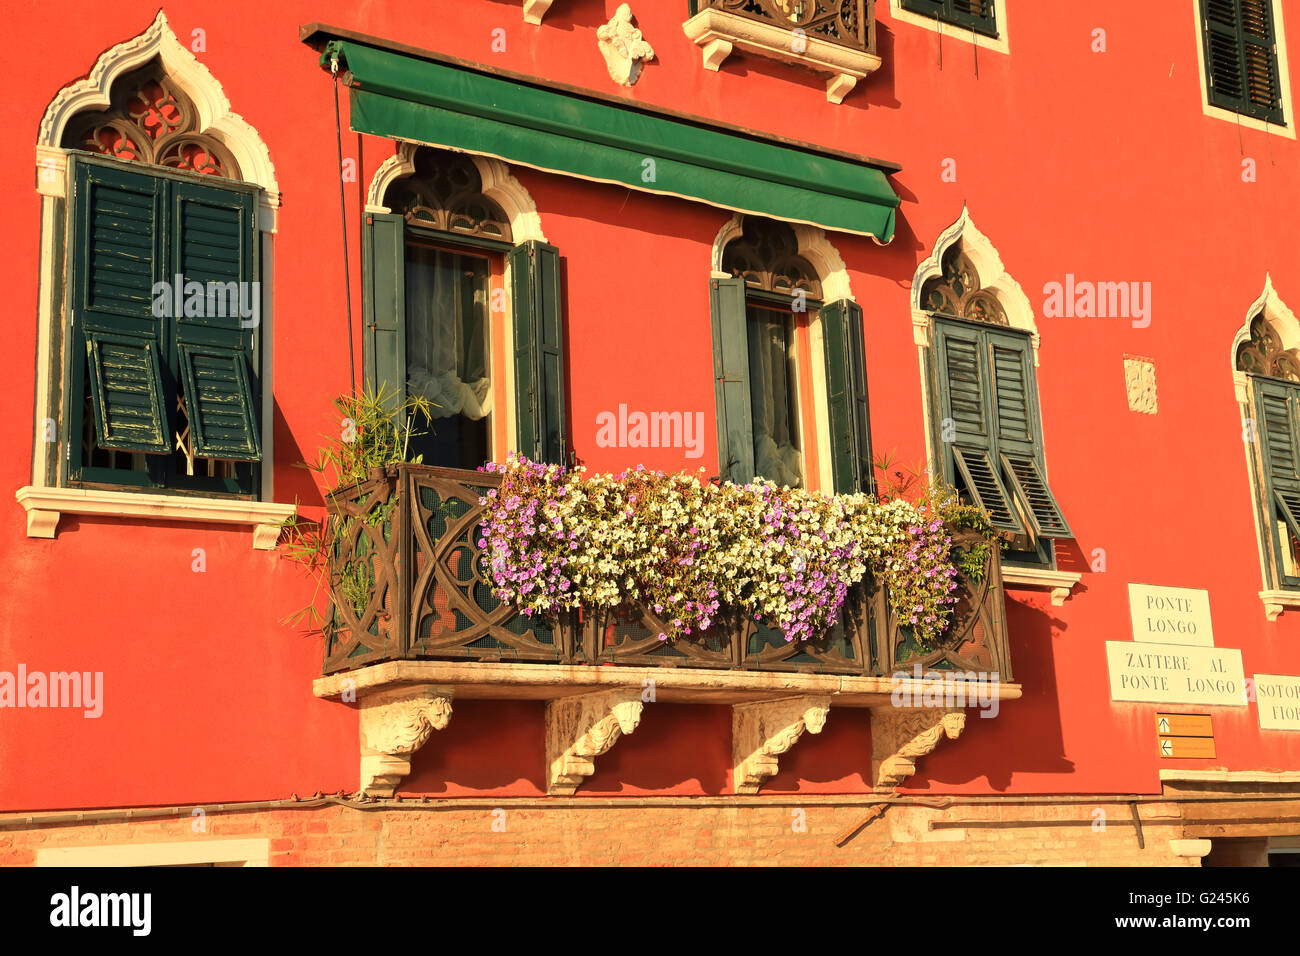 Palazzo window and balcony with flowers, Venice Stock Photo